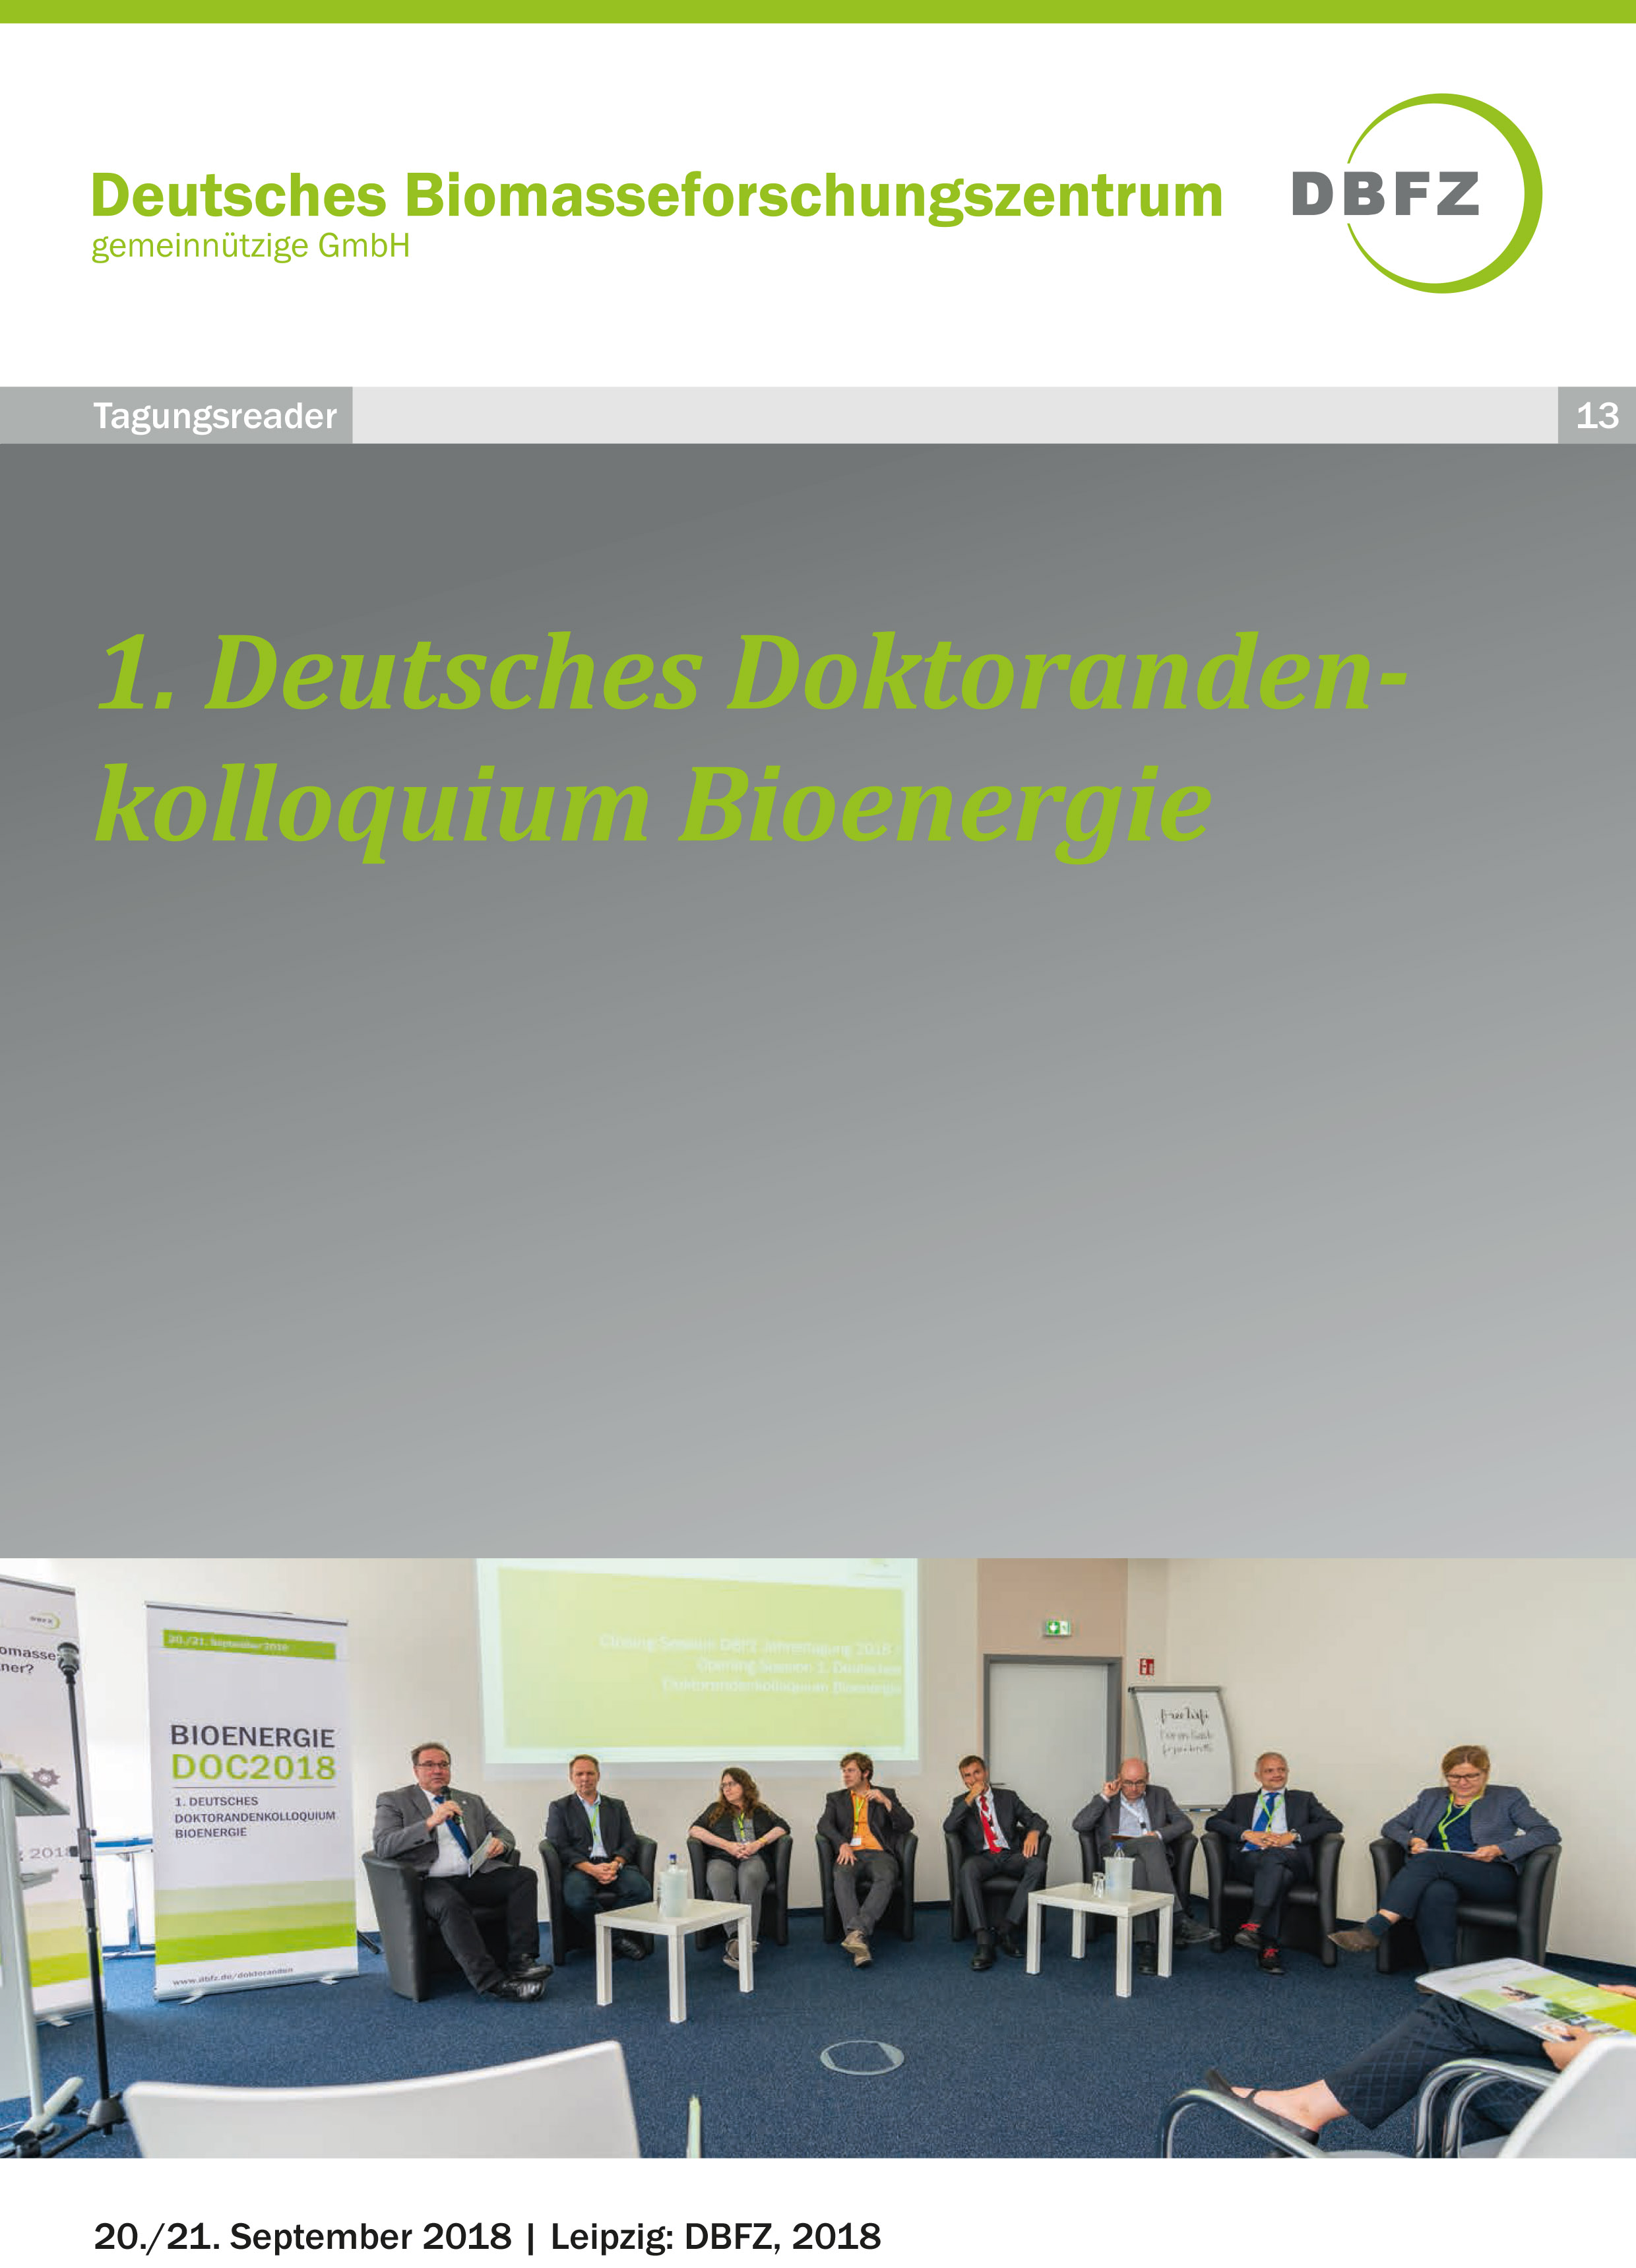 1. Deutsches Doktorandenkolloquium Bioenergie